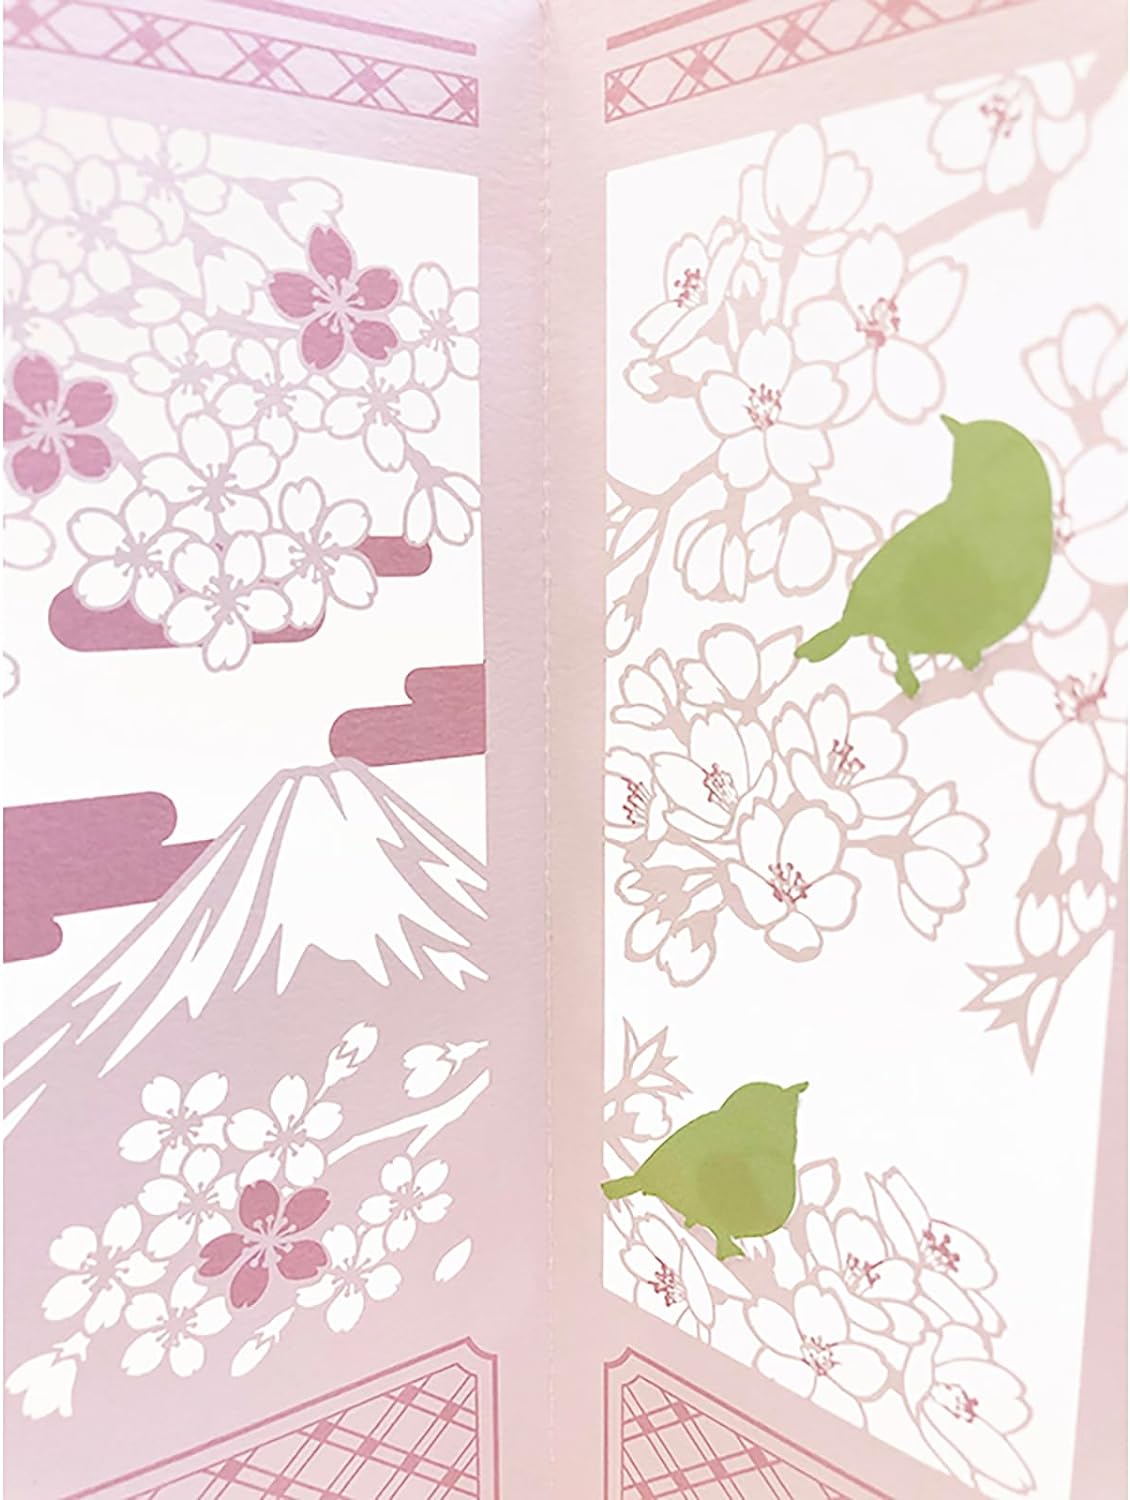 Sanrio Greeting Card: Sakura Screen